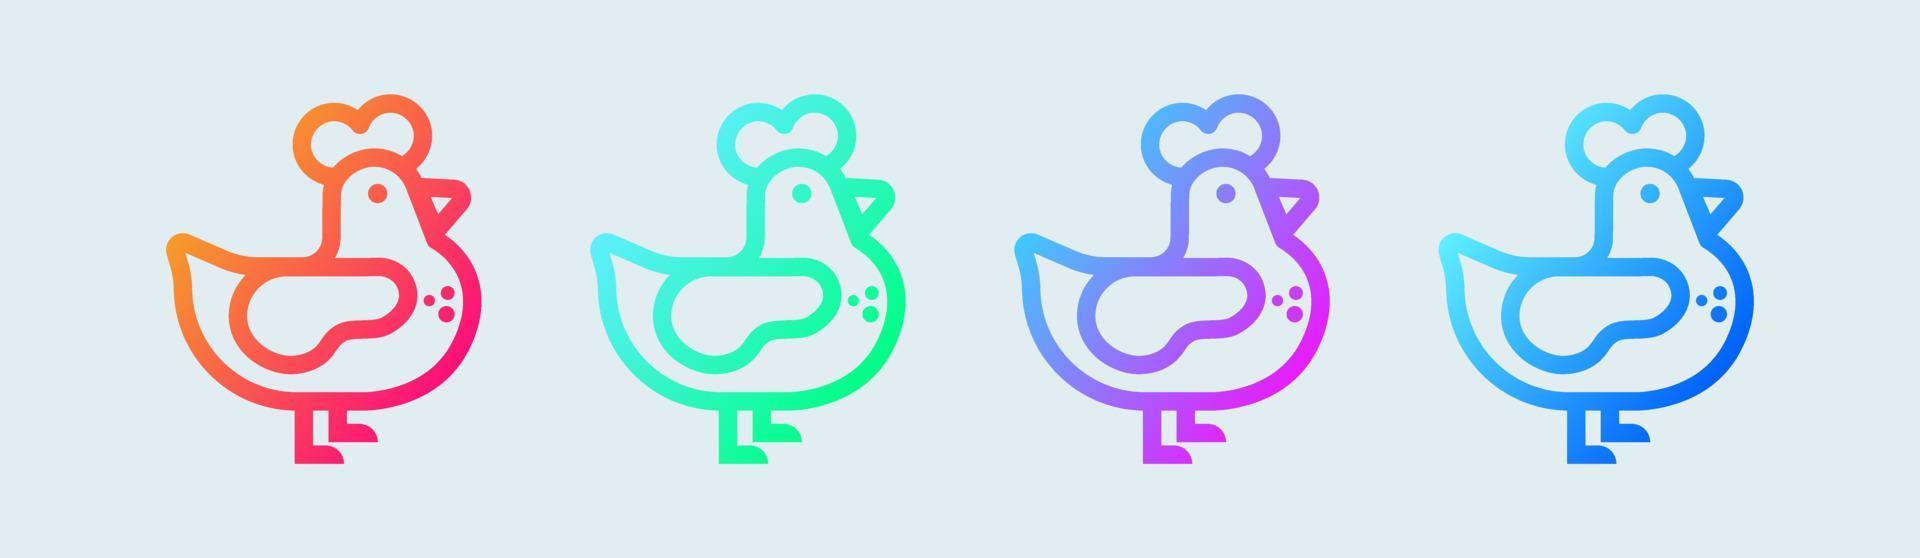 Chicken line icon in gradient colors. Hen signs vector illustrtaion.